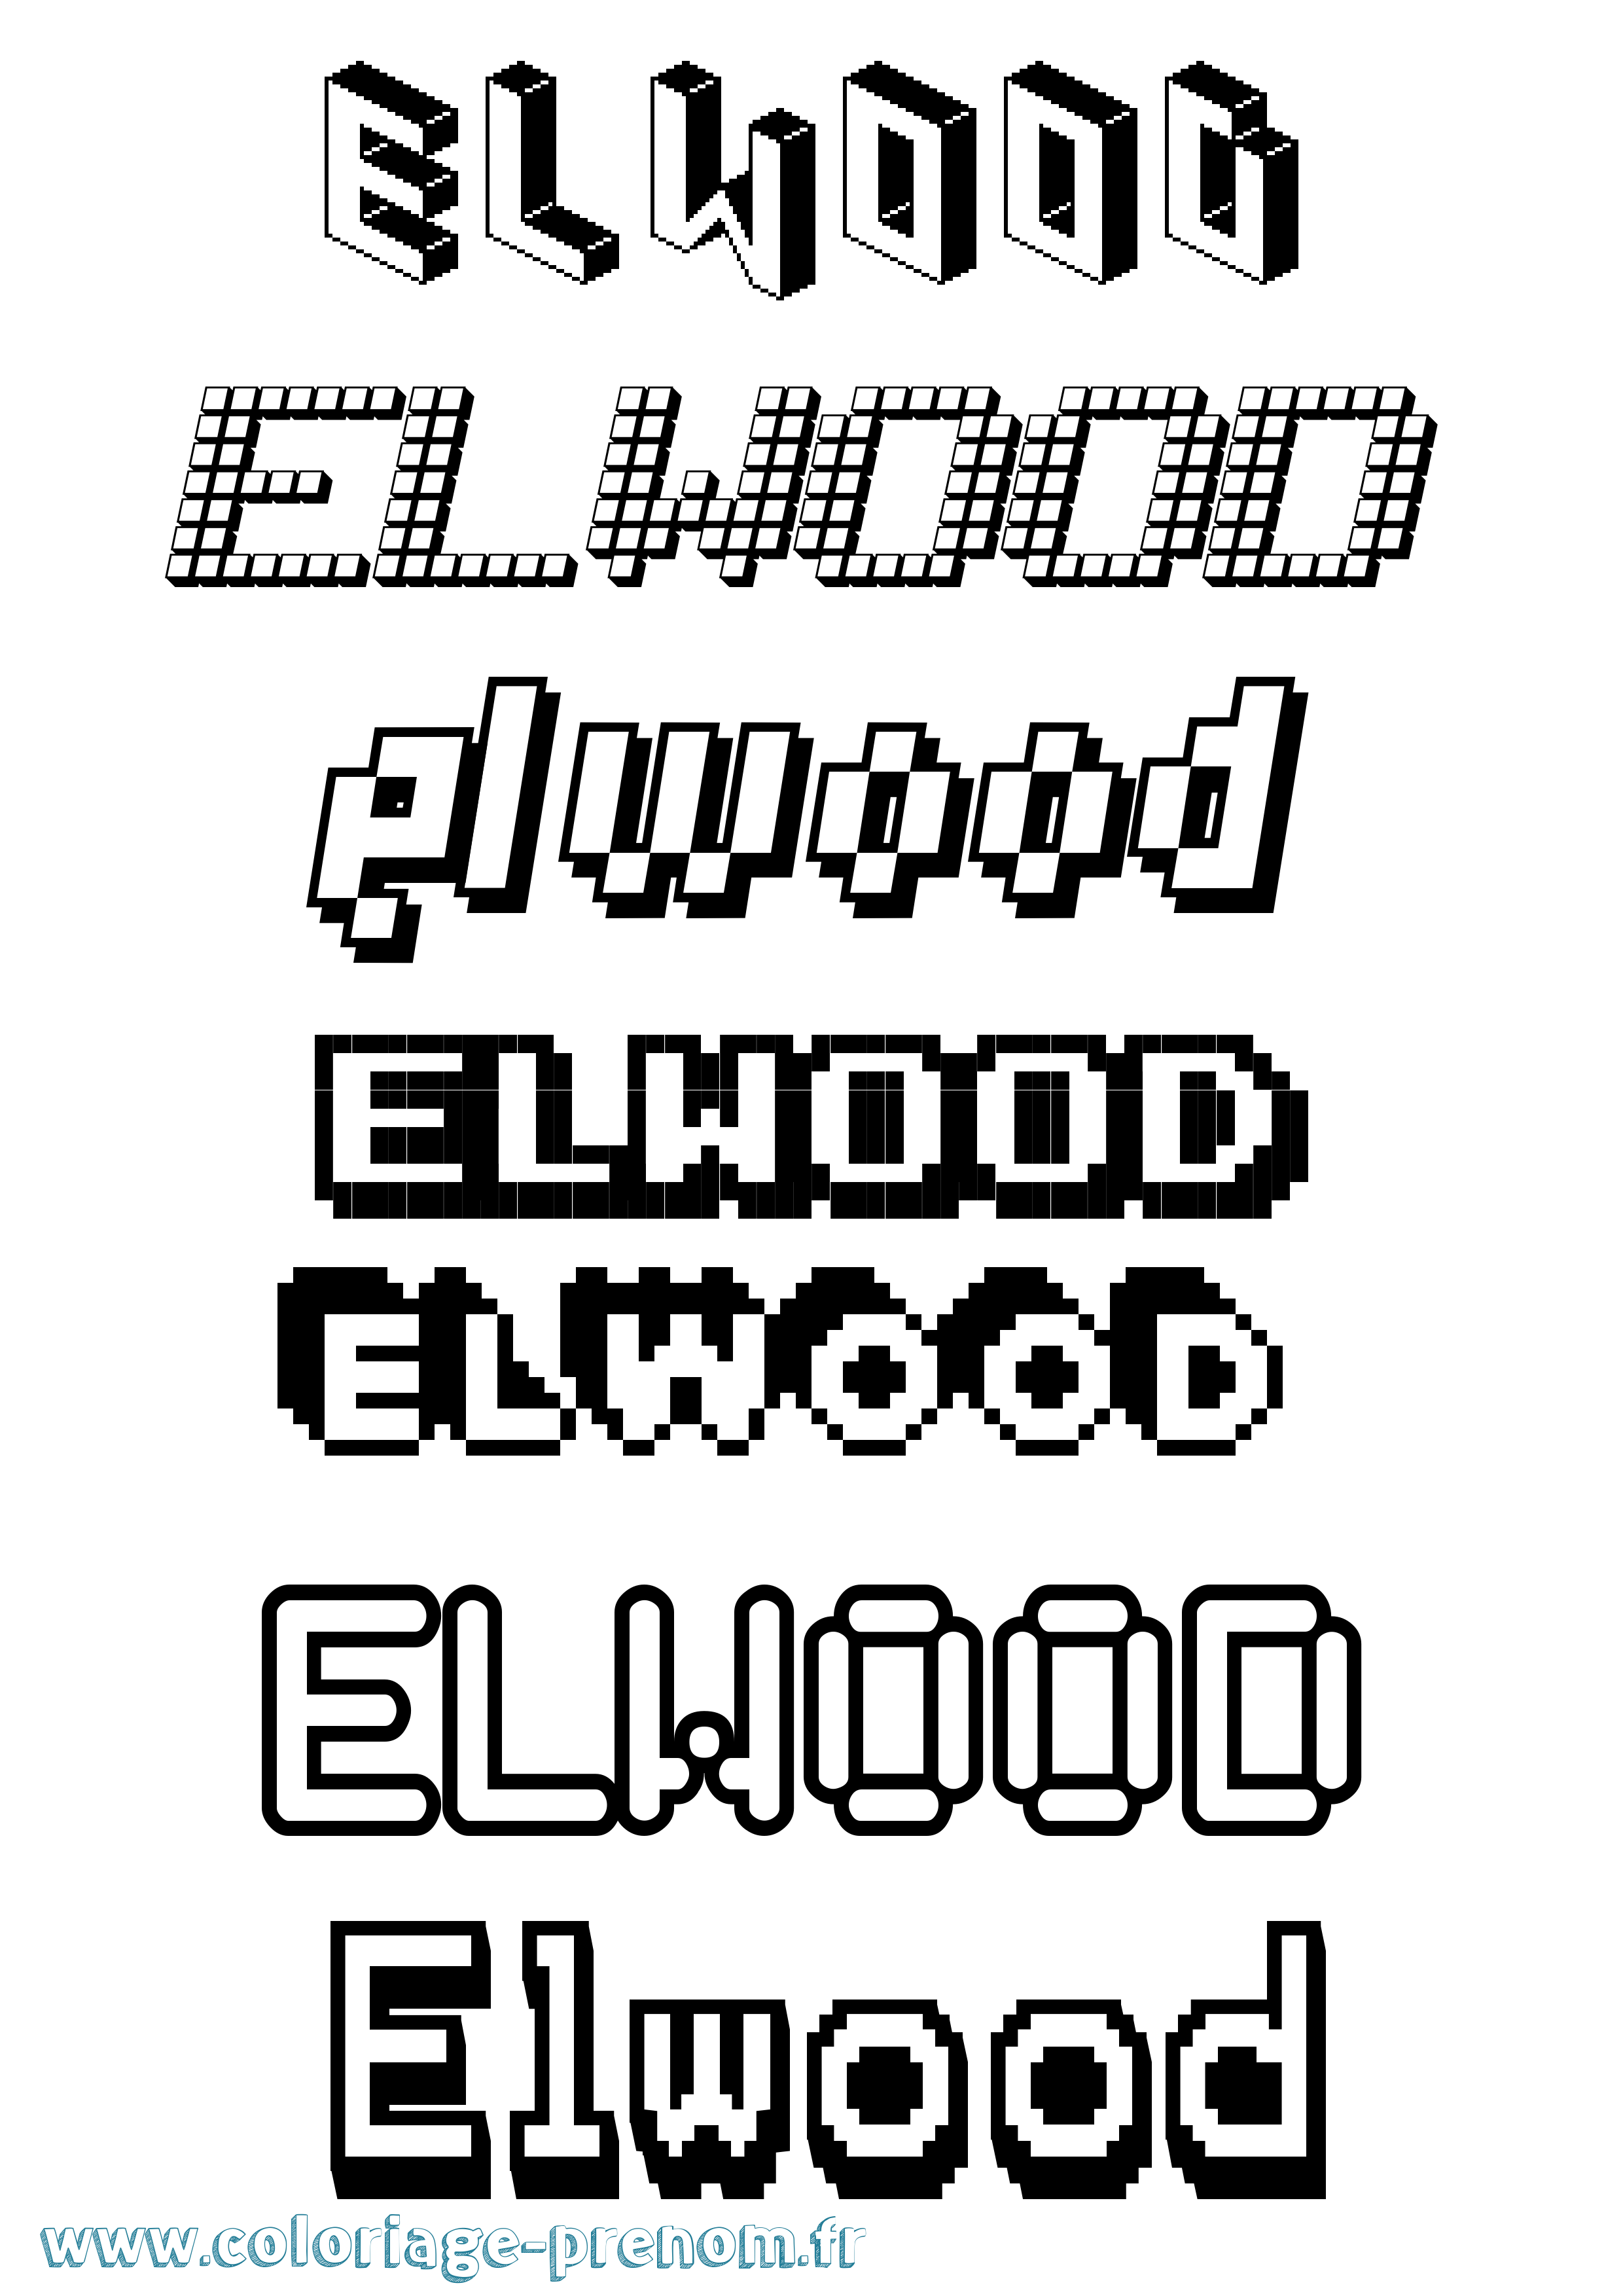 Coloriage prénom Elwood Pixel